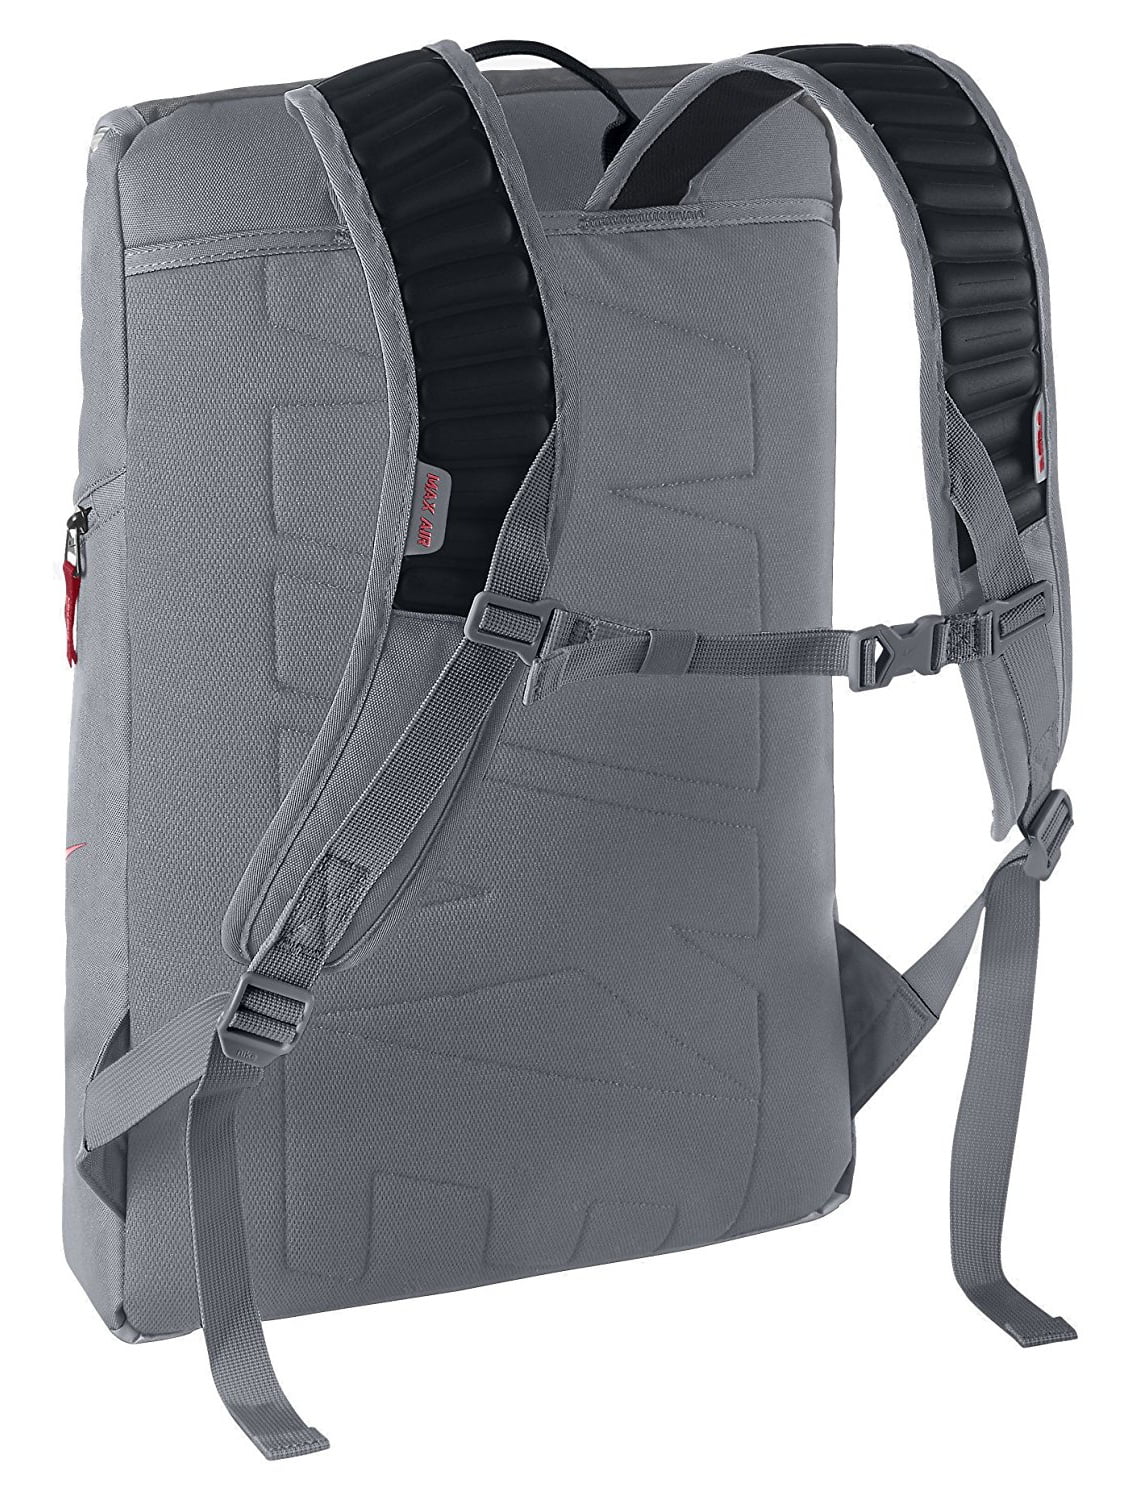 Nike Lebron James Air Cushion Basketball Schoolbag Backpack Gray